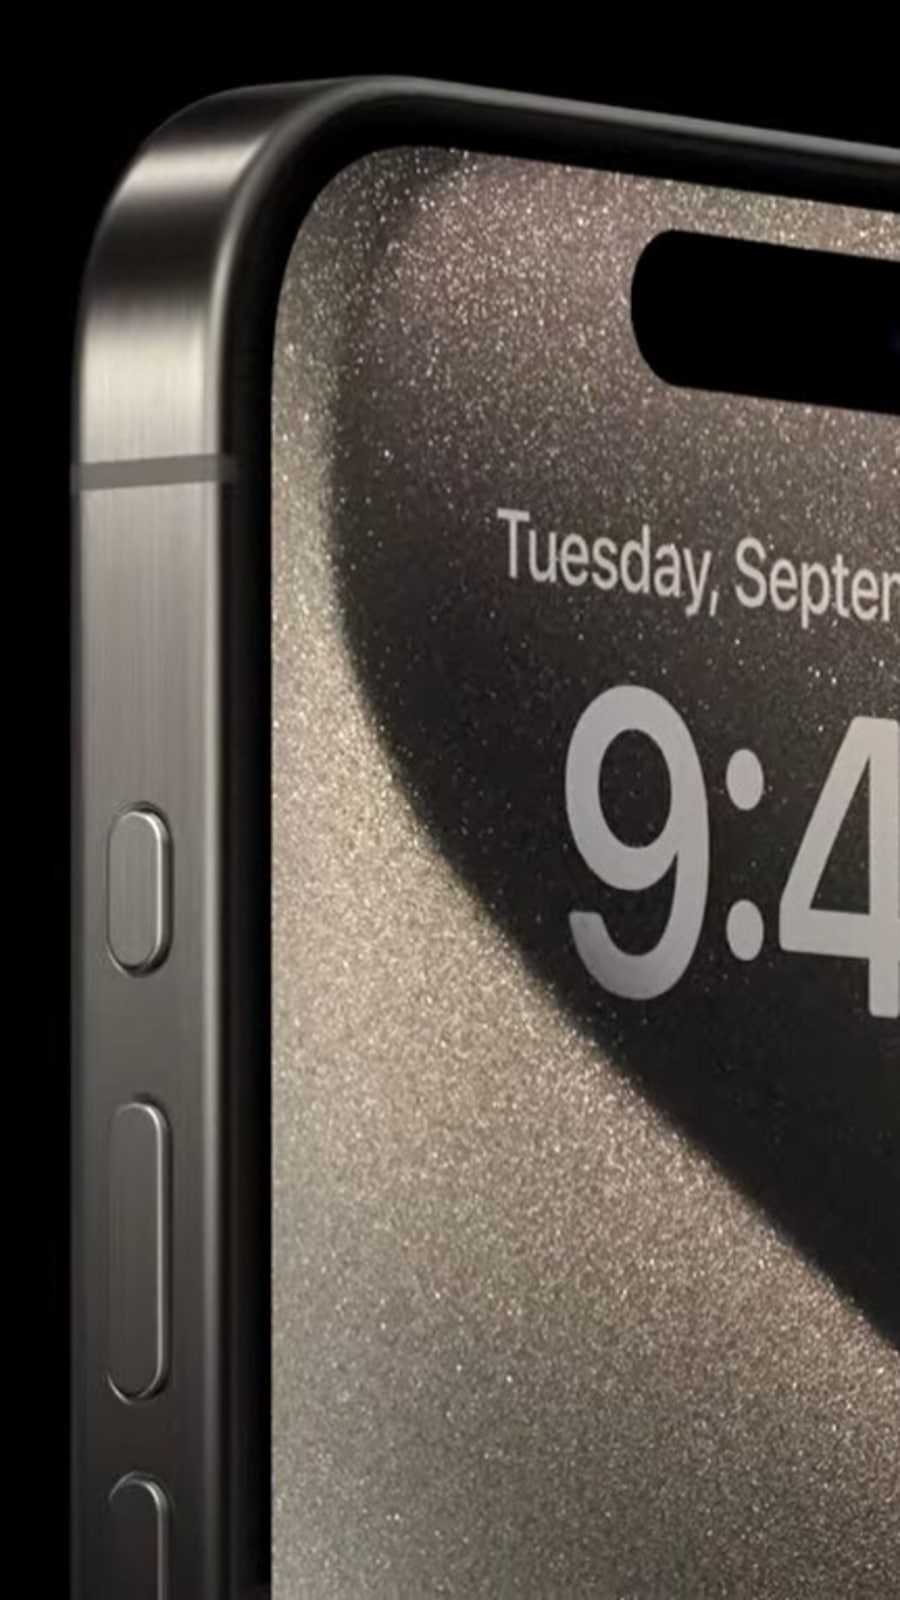 iphone 15: Redington, Ingram Micro offer new iPhones, Watch across